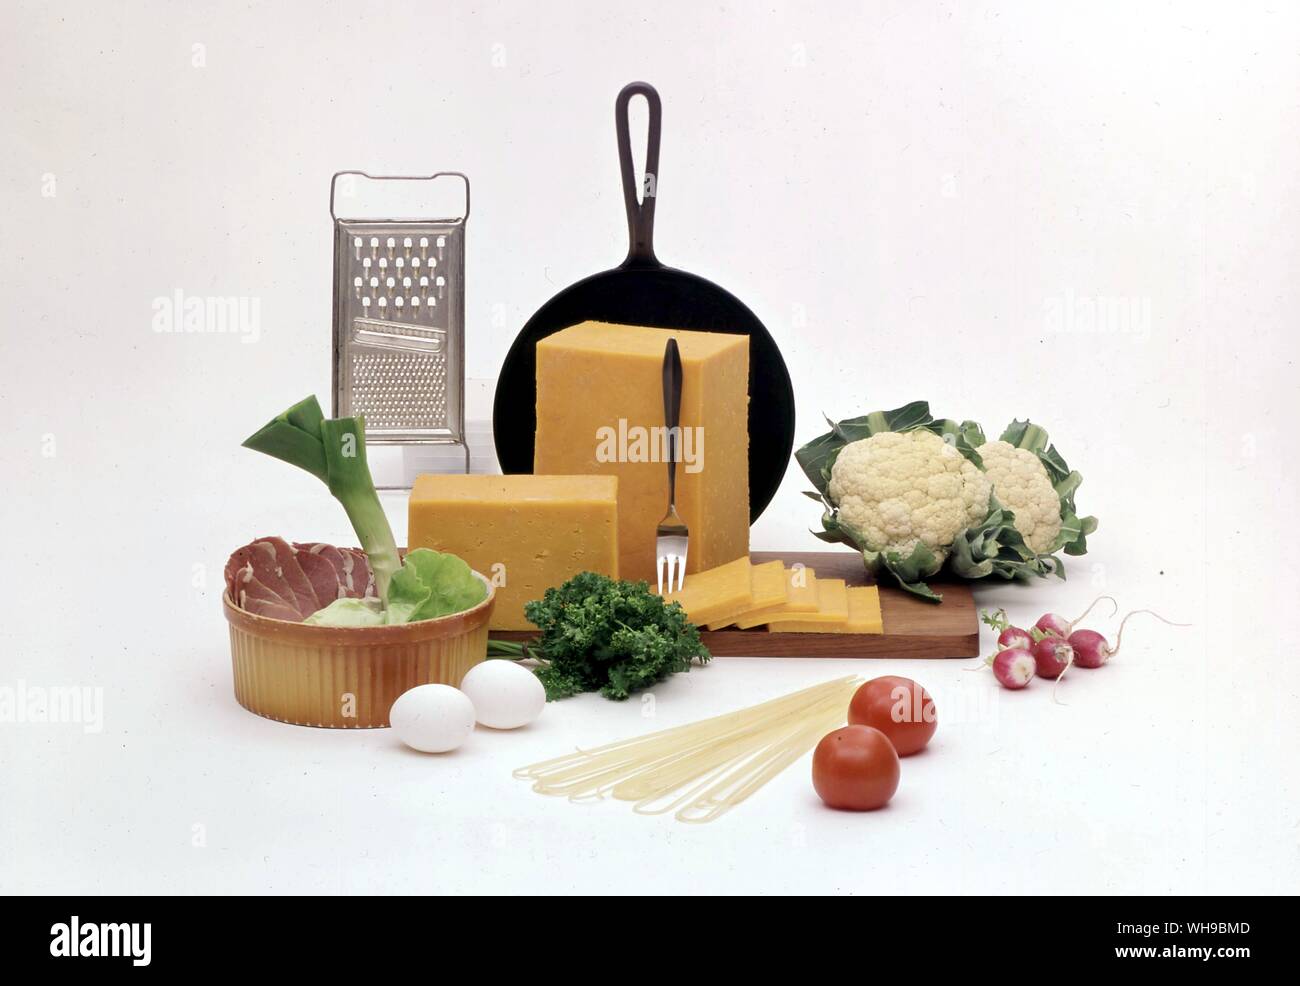 Cheese and Veg Stock Photo